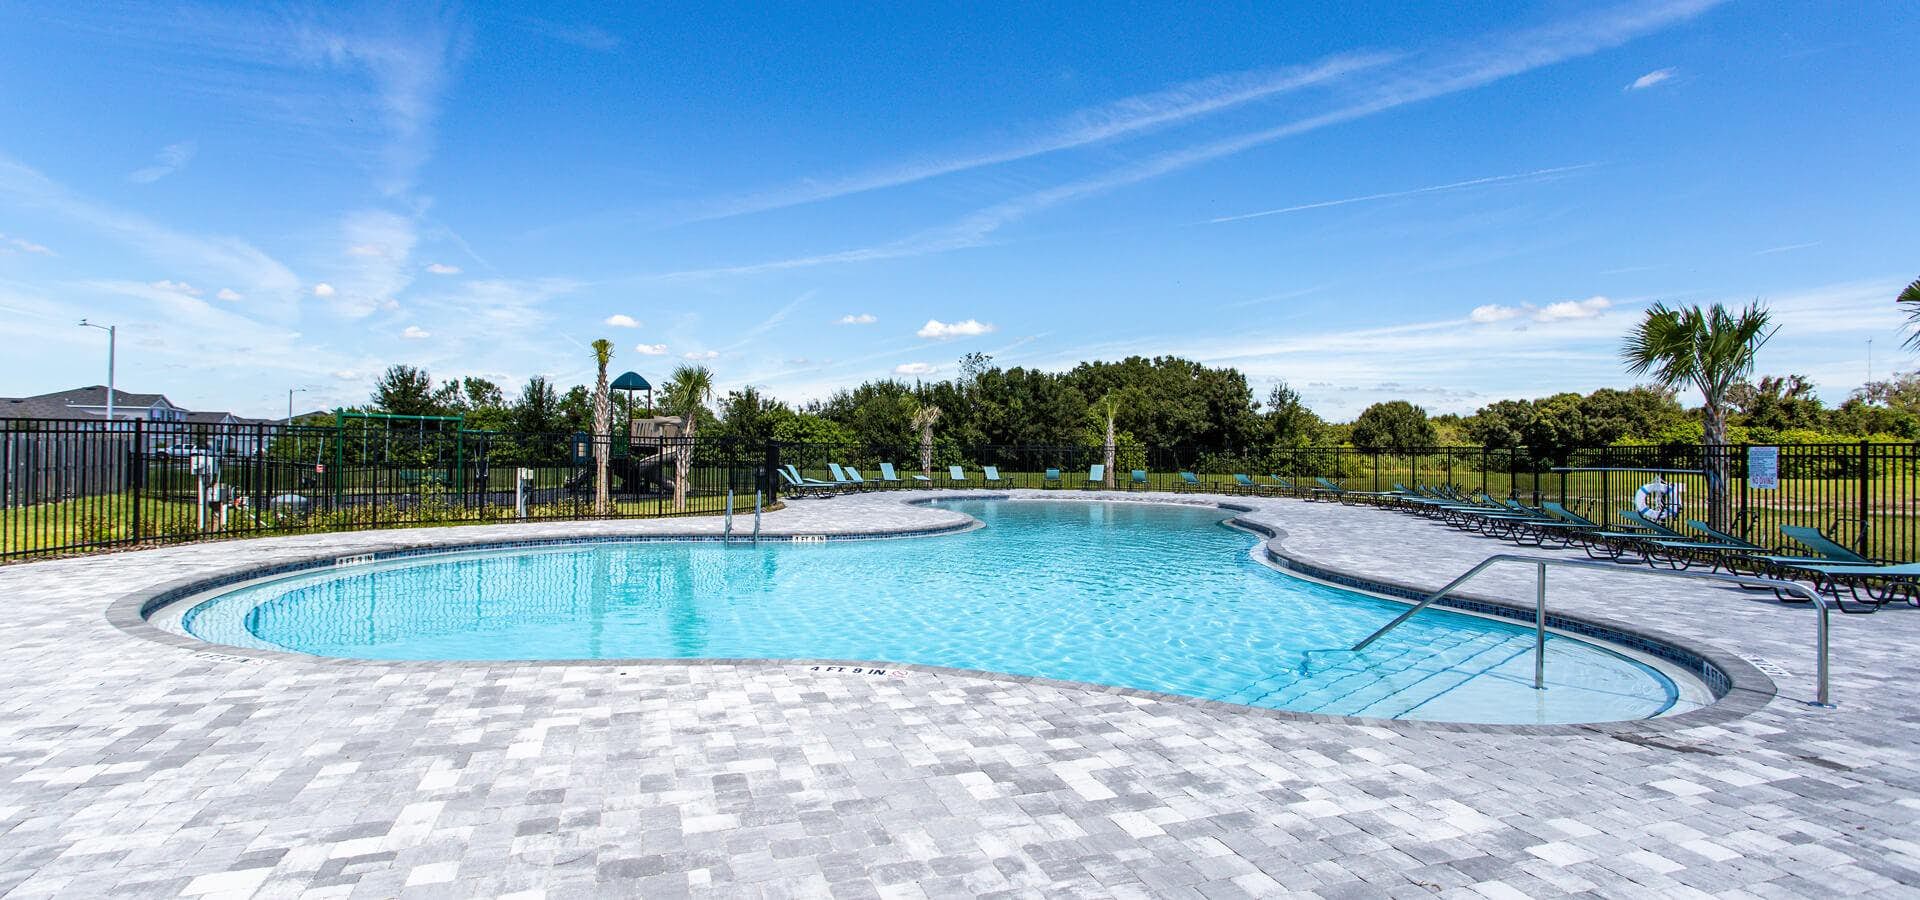 Pool amenity at Ridgewood in Riverview, FL